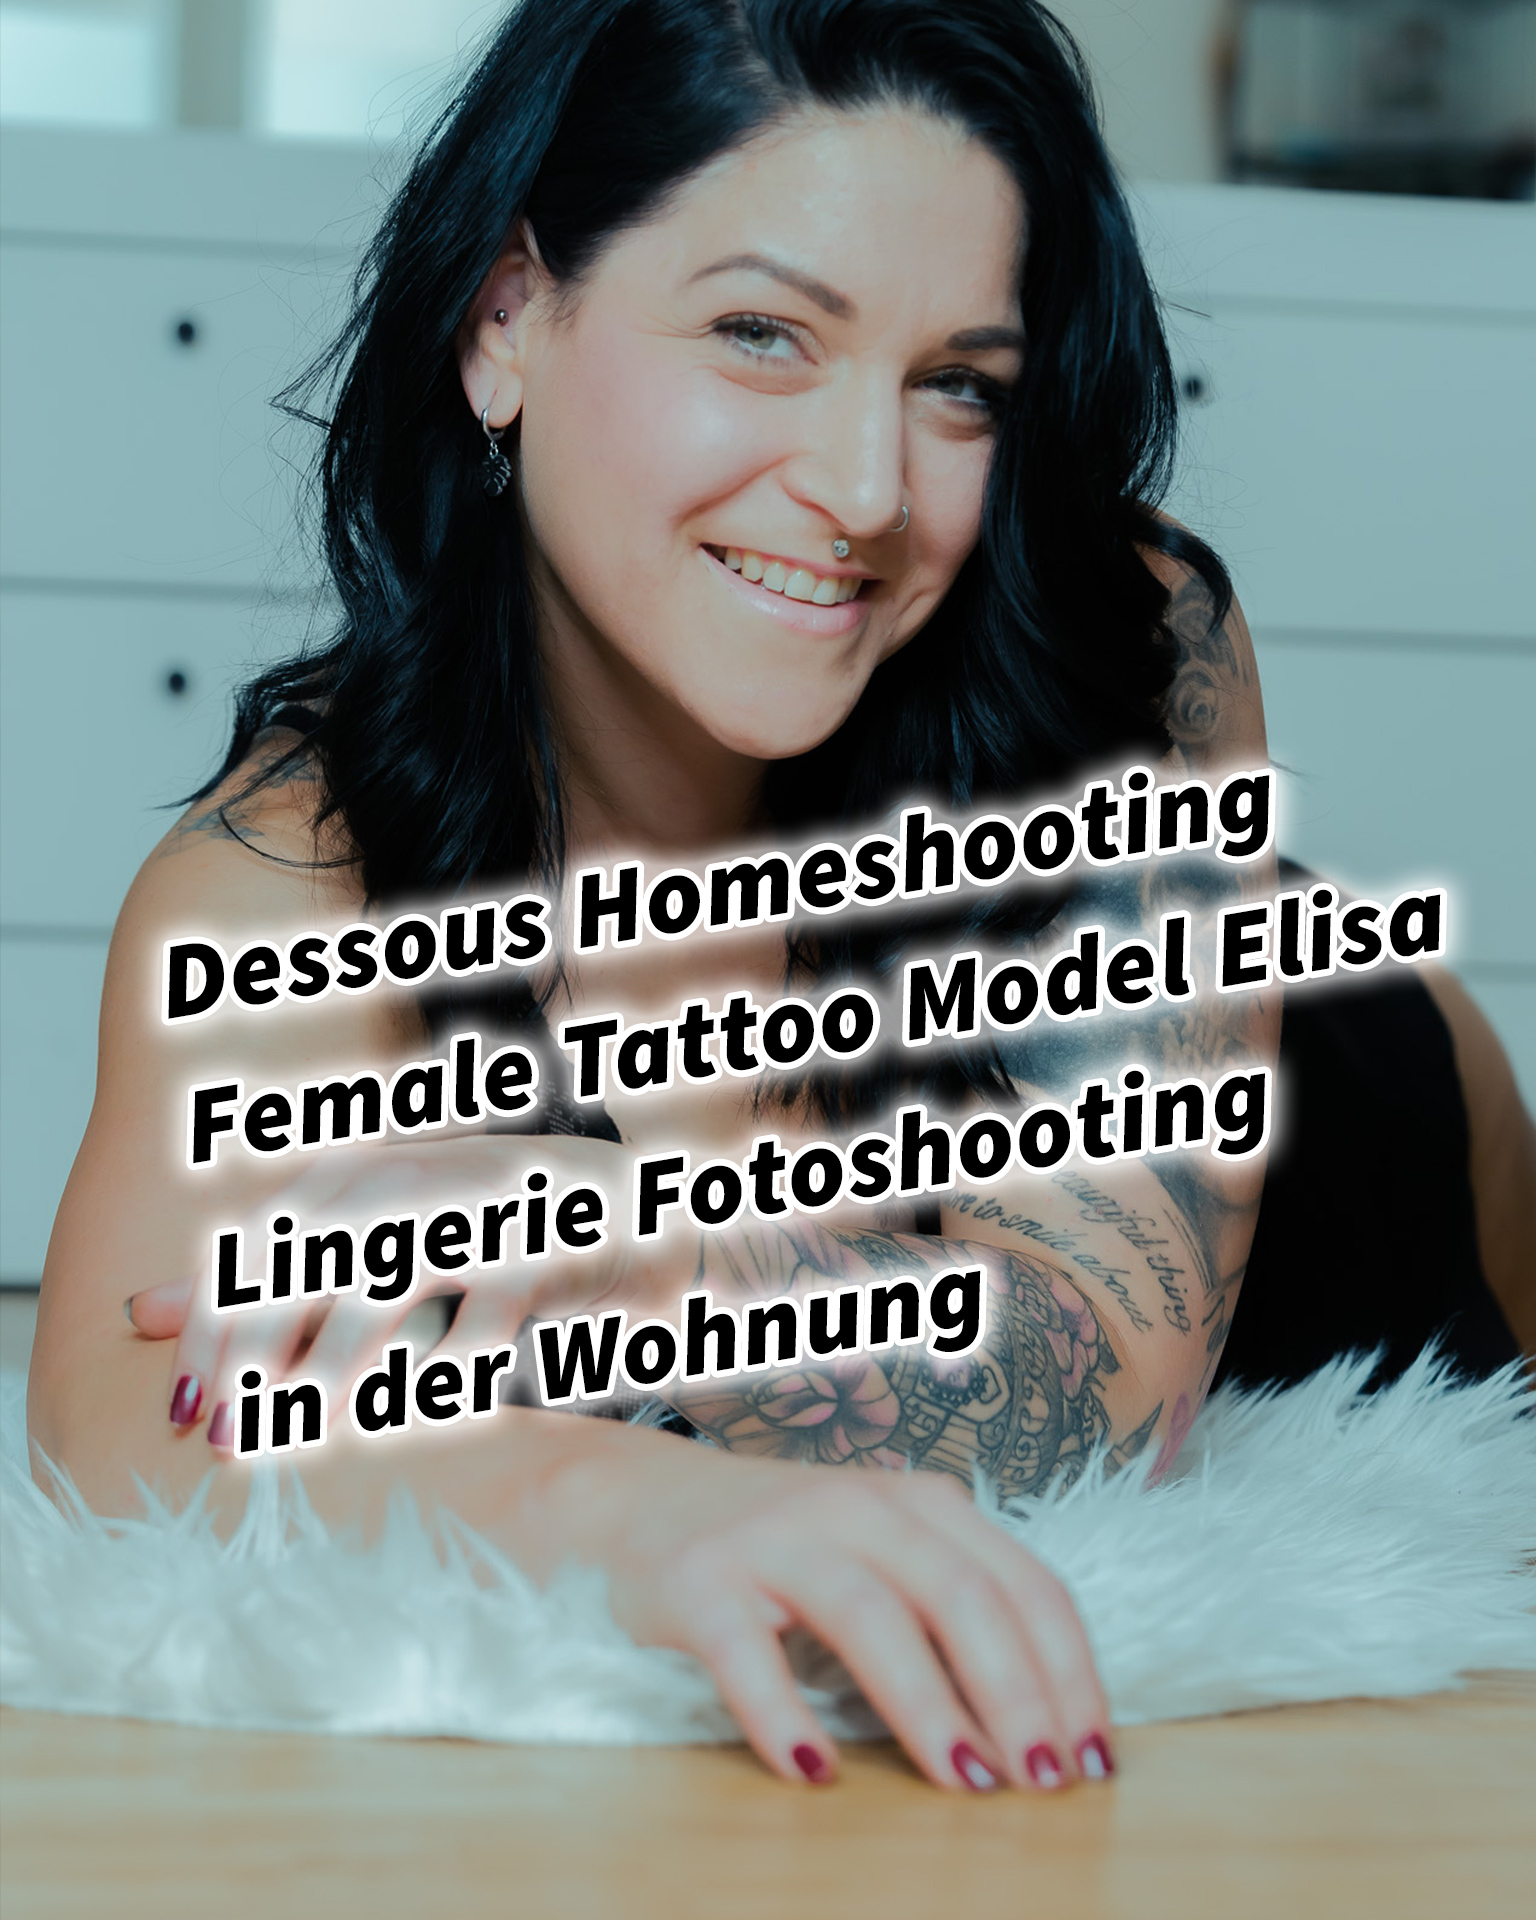 Dessous Homeshooting Female Tattoo Model Elisa Lingerie Fotoshooting in der Wohnung inkl. 20 Fototipps